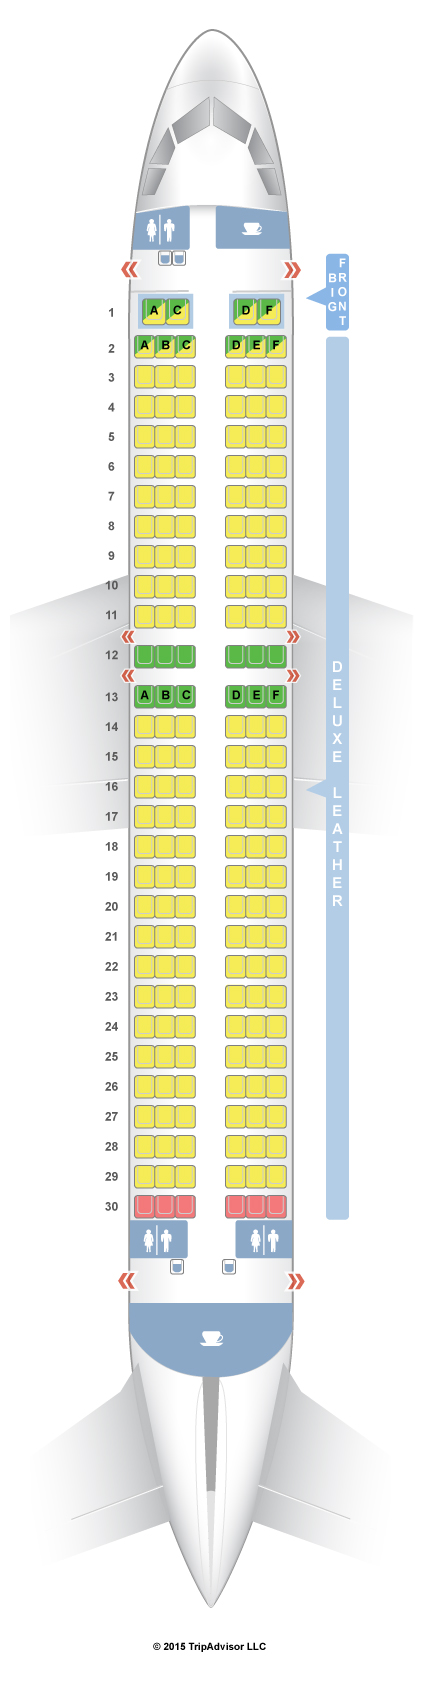 Spirit Airlines Zone Chart